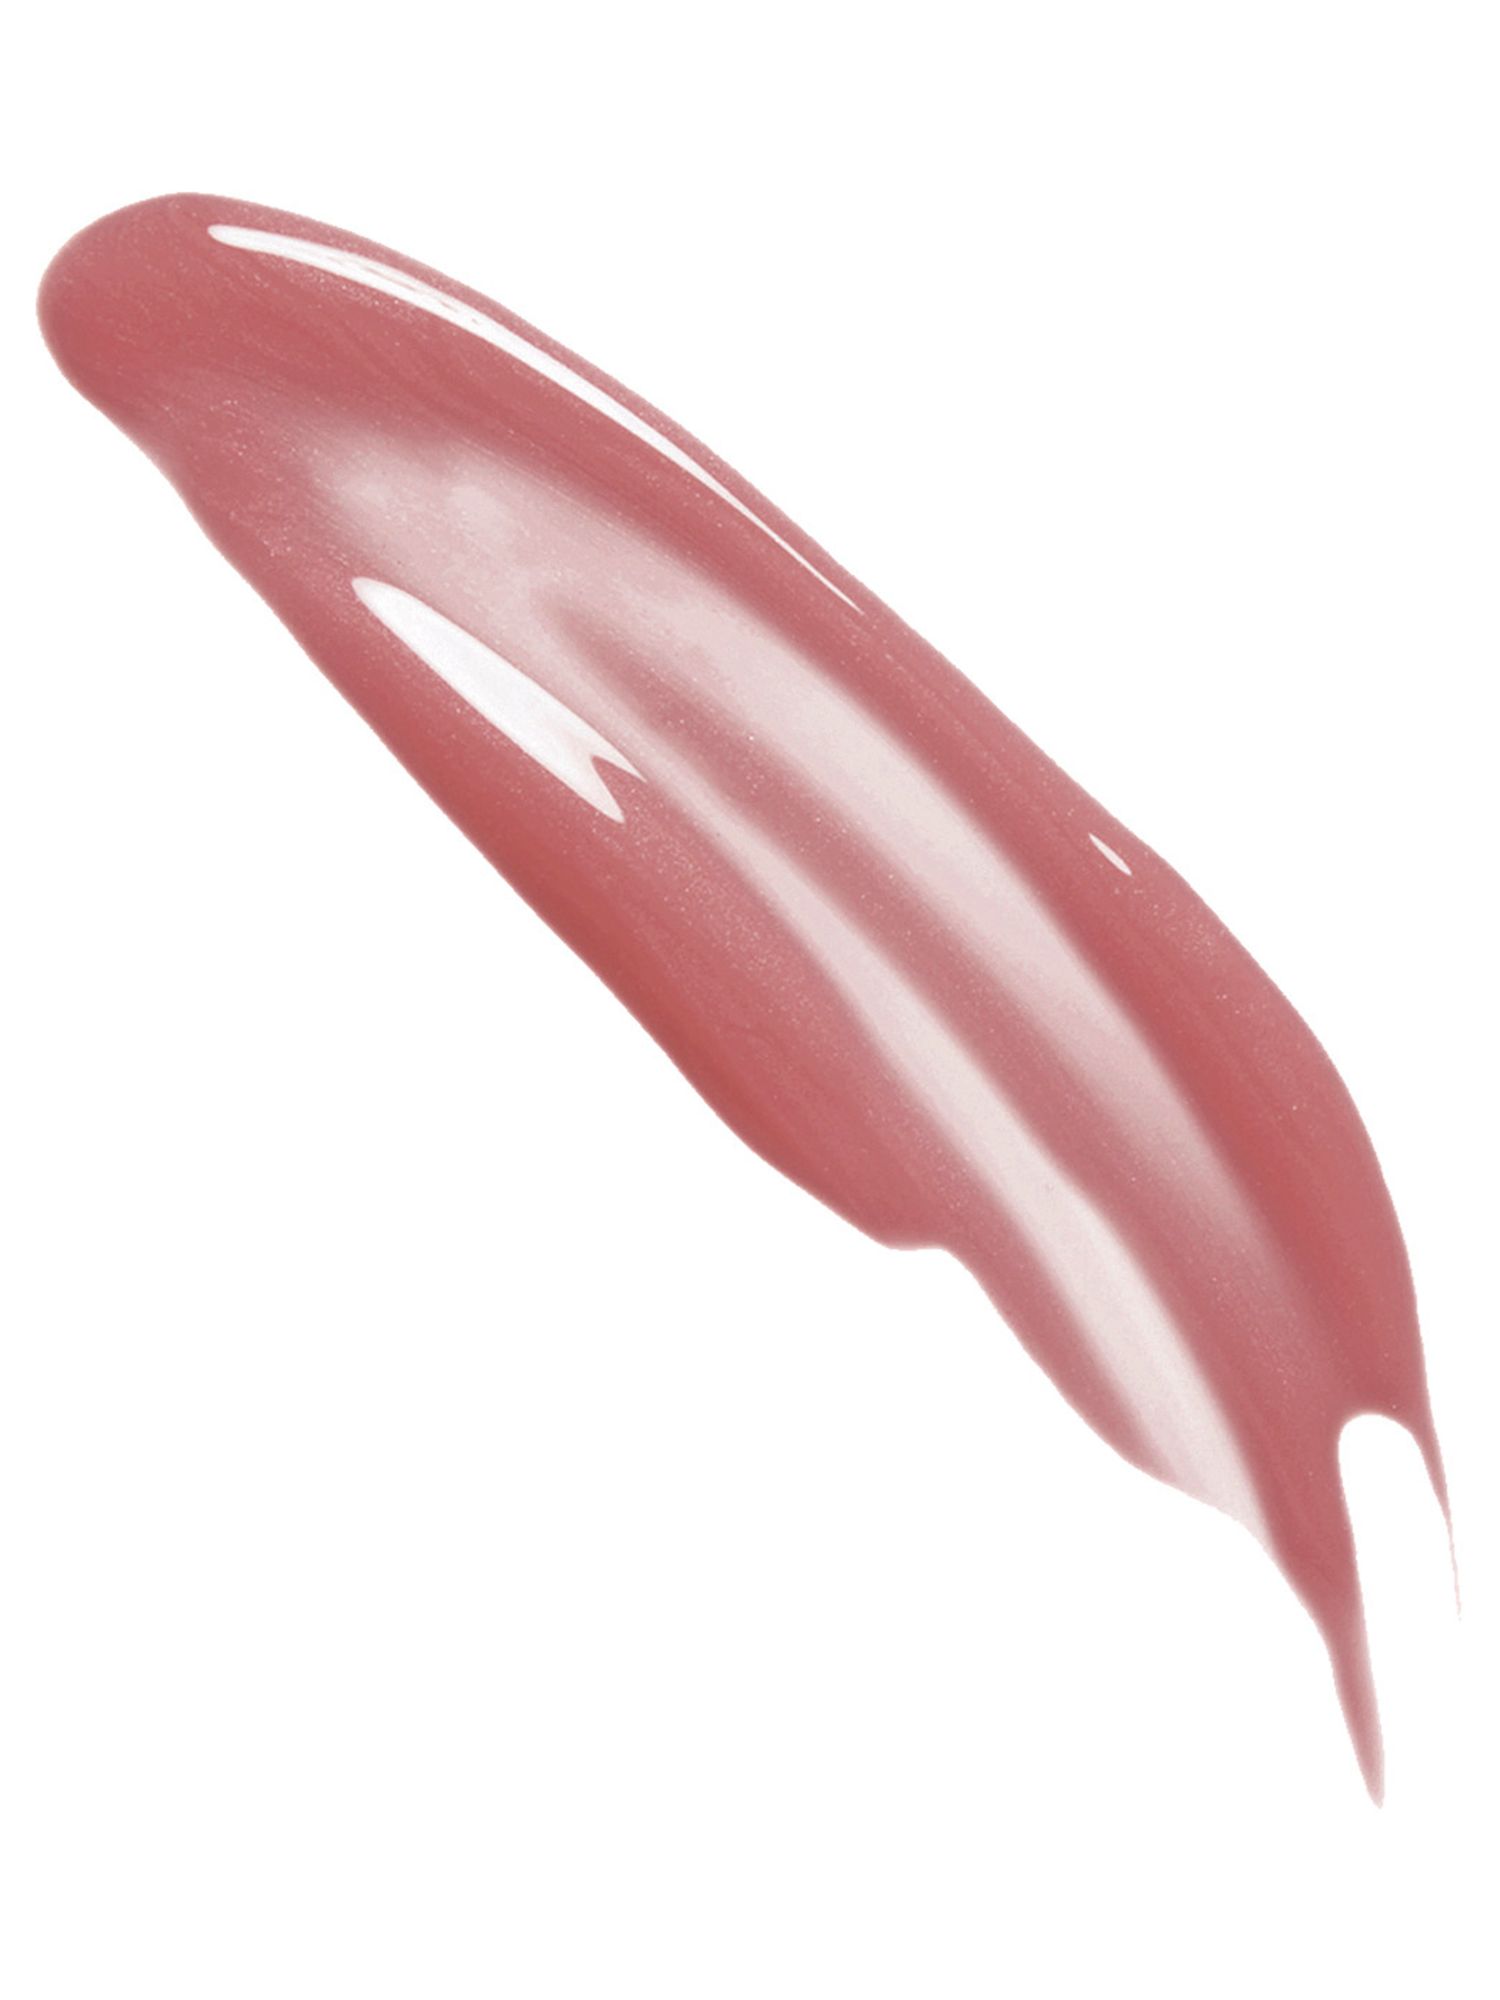 Clarins Natural Lip Perfector, 16 Intense Rosebud